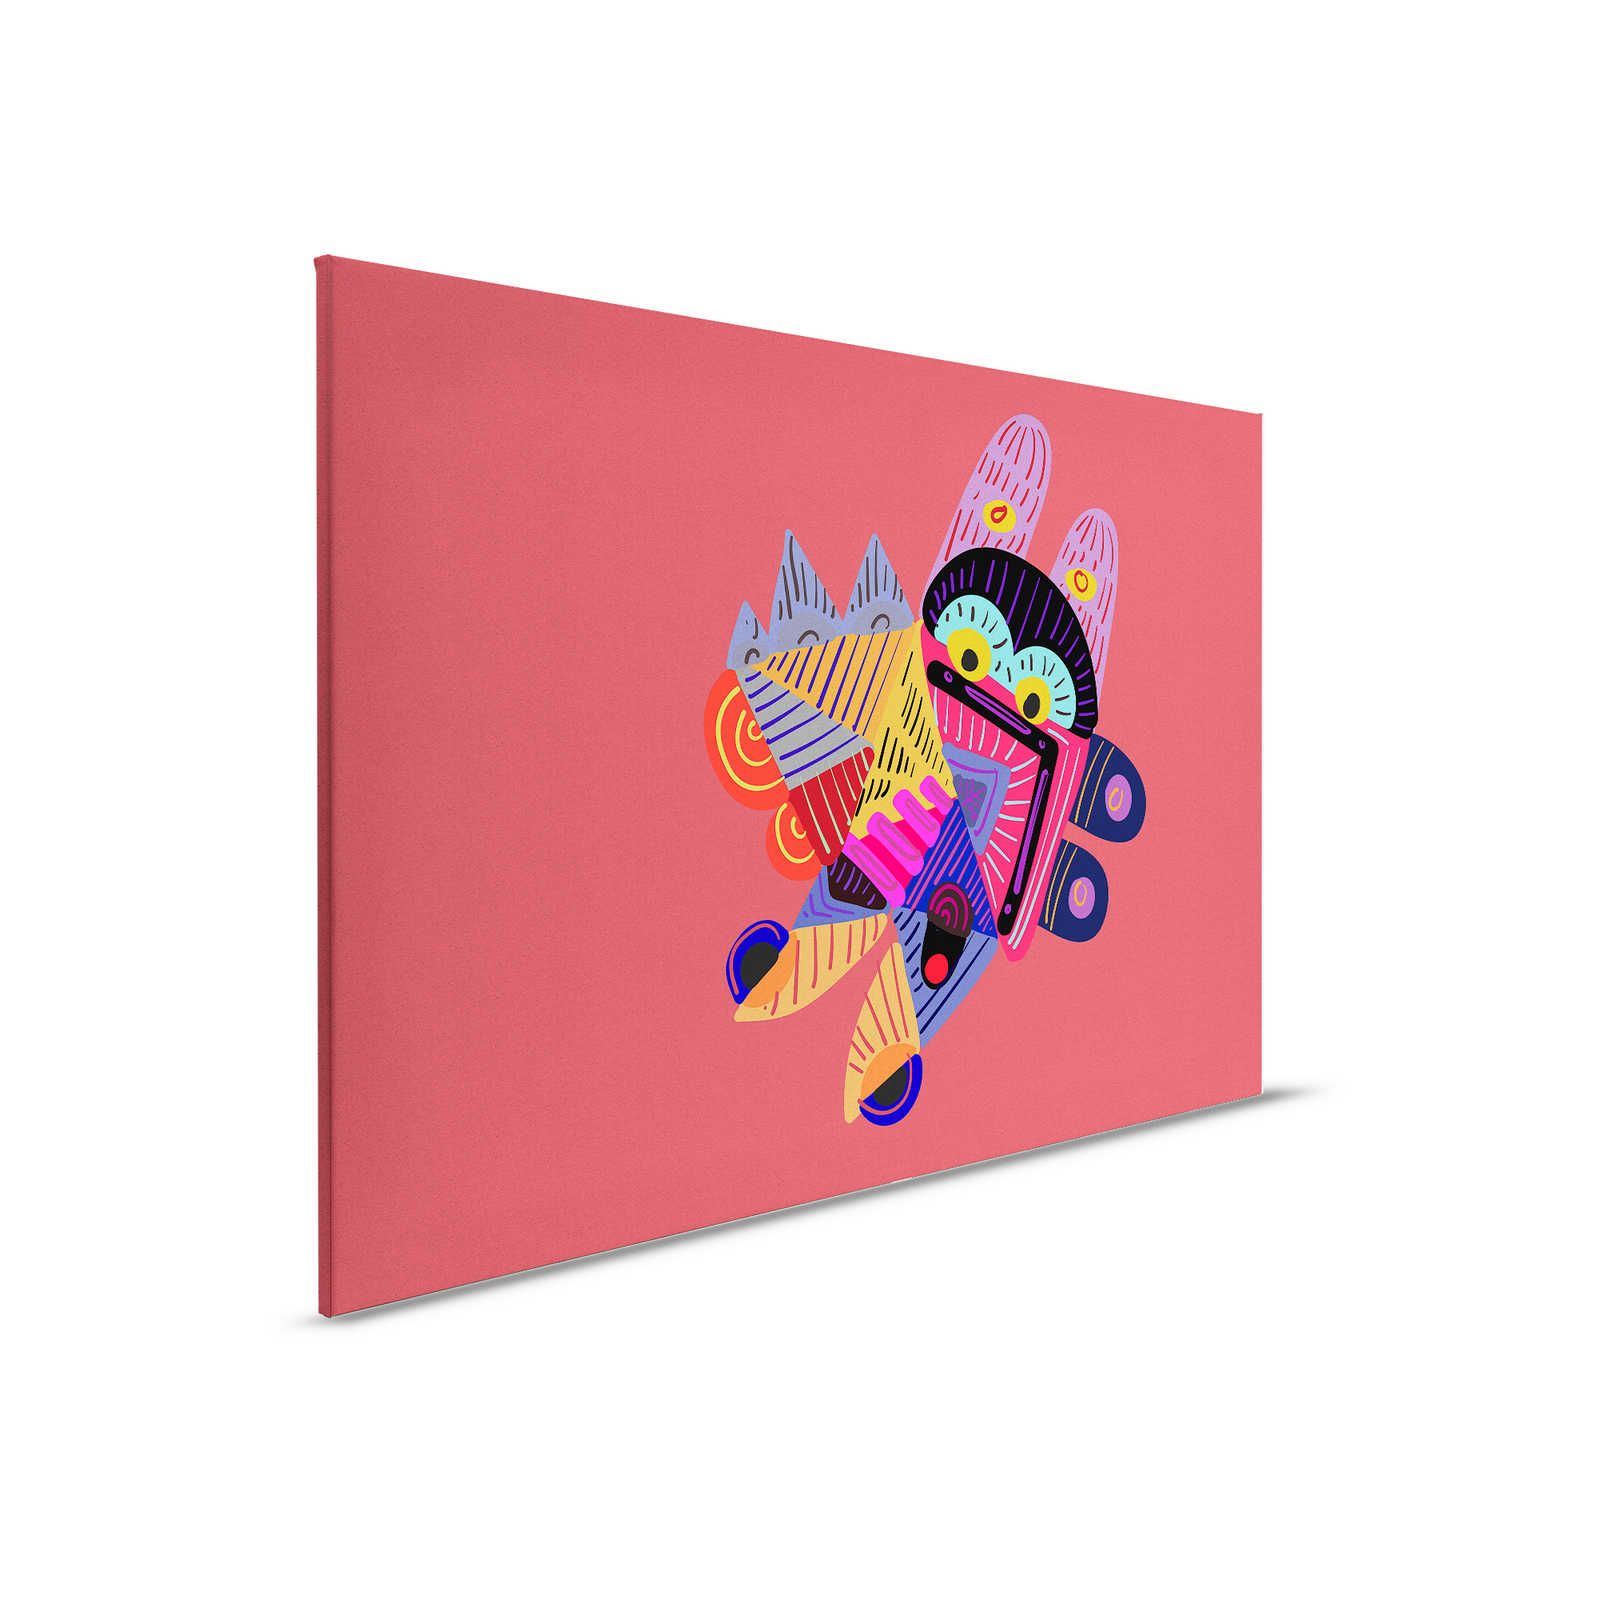         Looney Land 1 - Rotes Leinwandbild Comic Figur im bunten Design – 0,90 m x 0,60 m
    